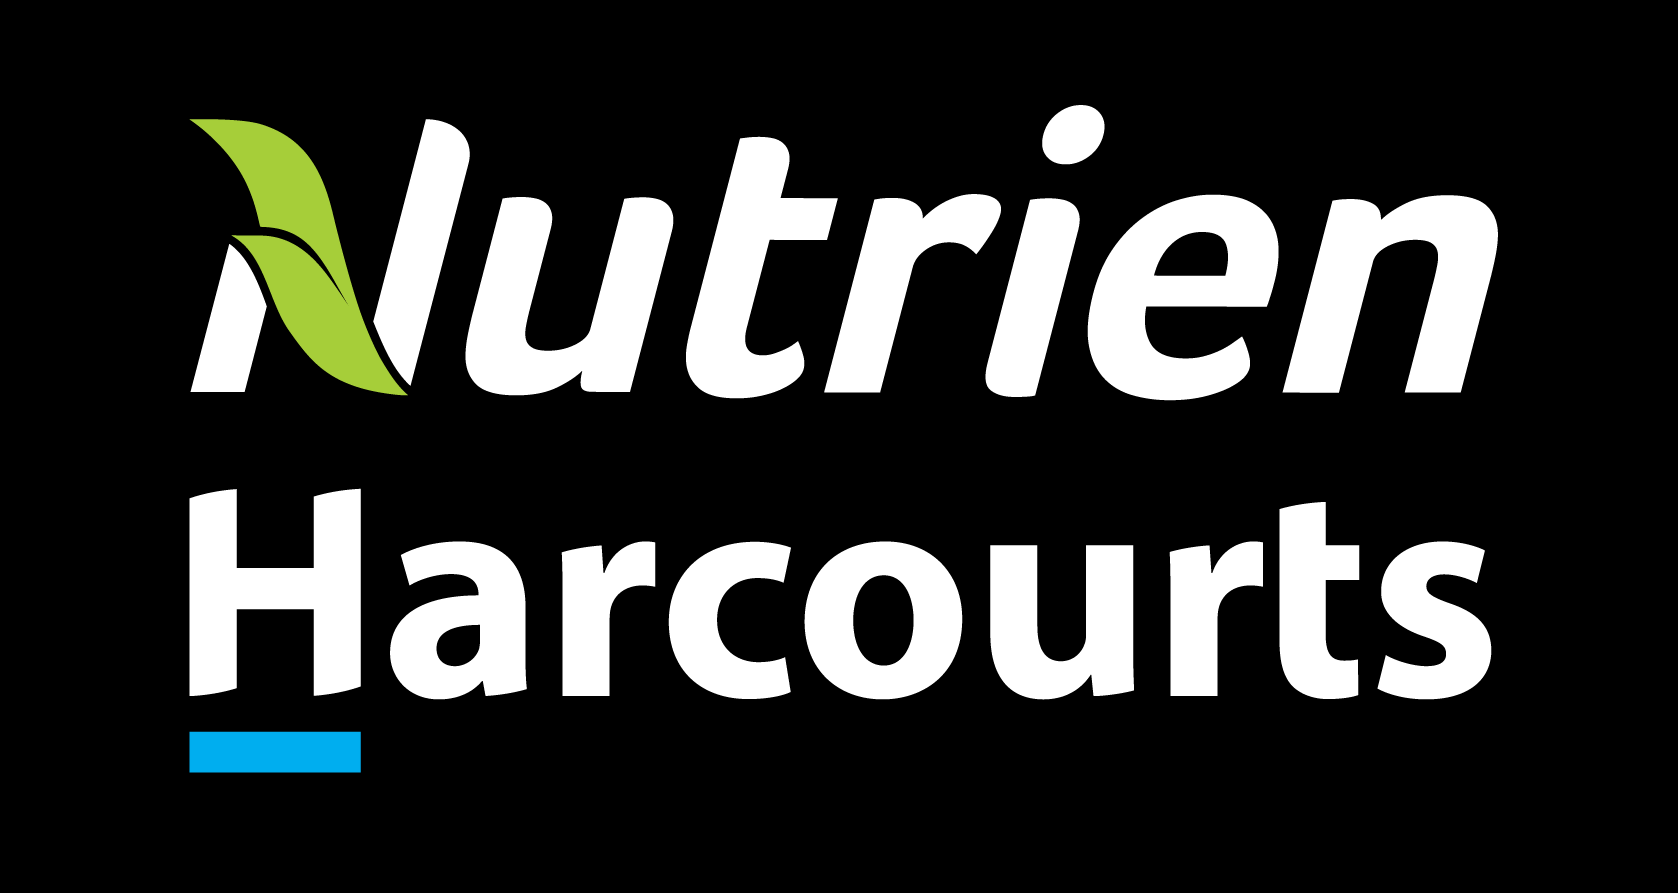 Nutrien Harcourts